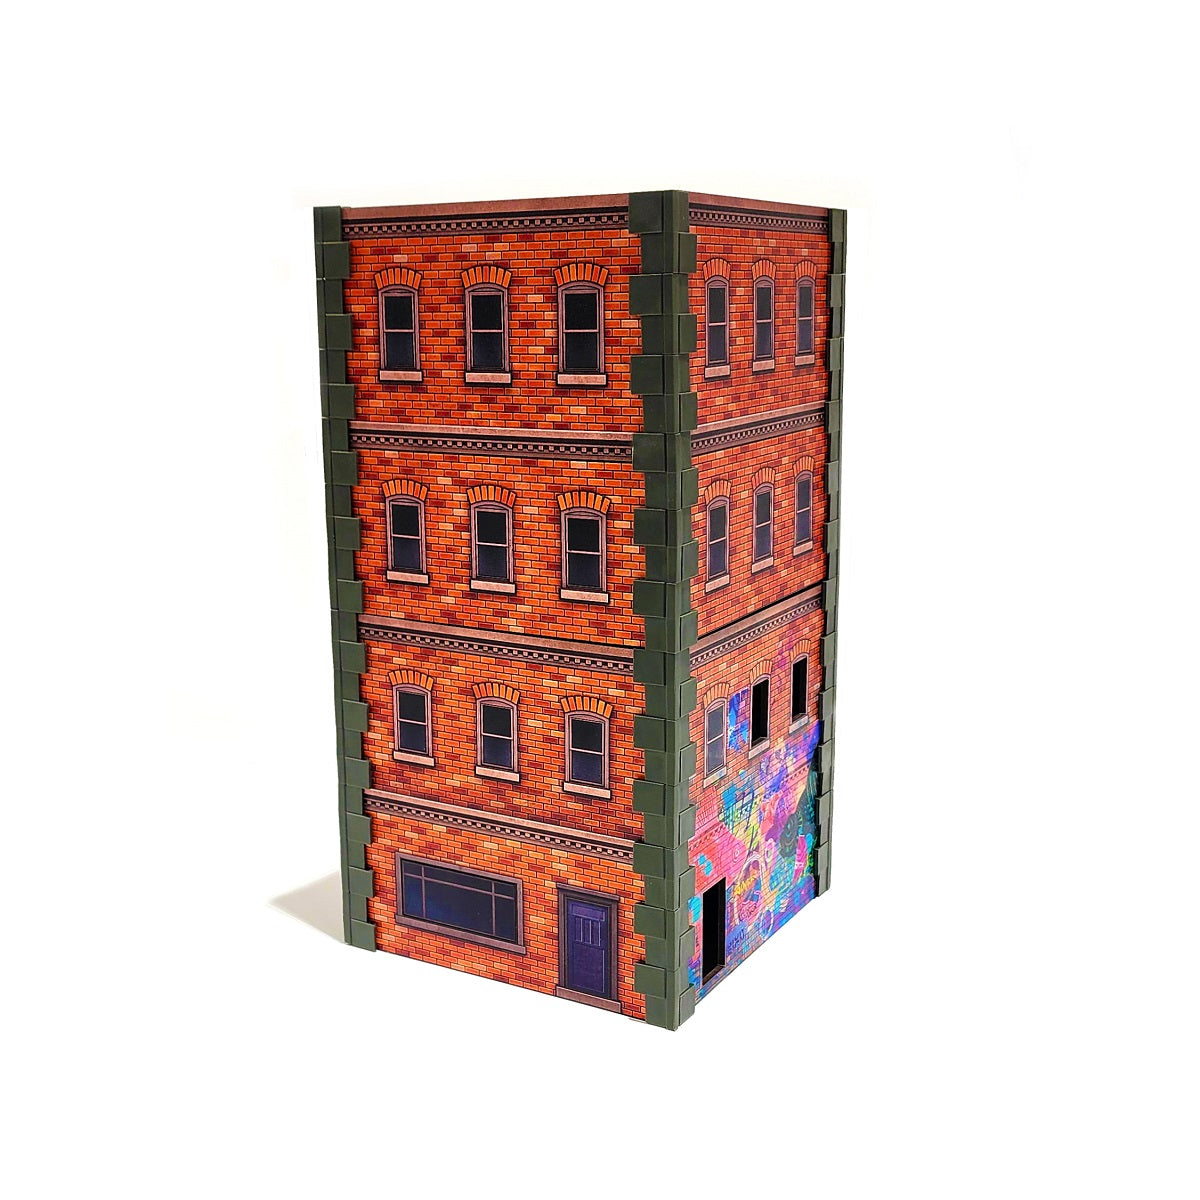 Metropolis Cityscape: Two Small Brick Buildings